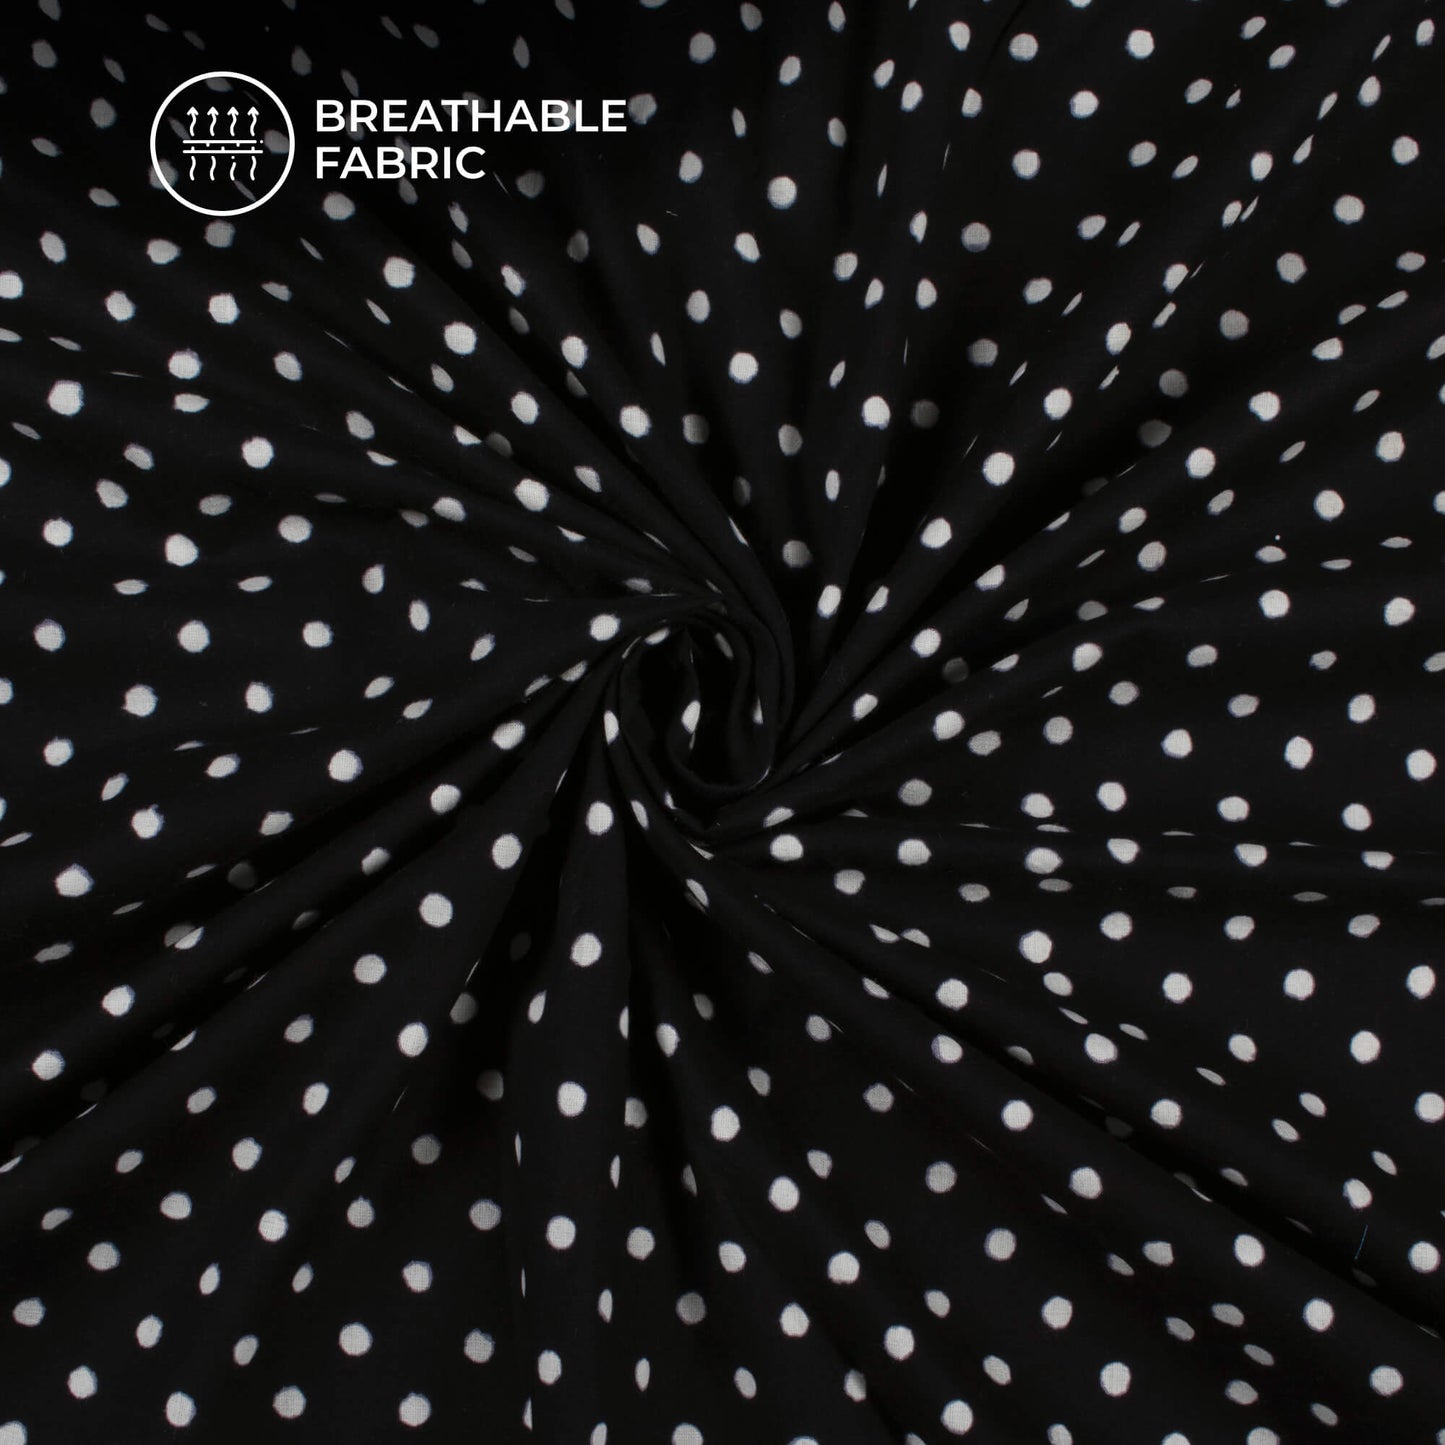 Monochrome Polka Dots Pattern Handblock Cotton Fabric